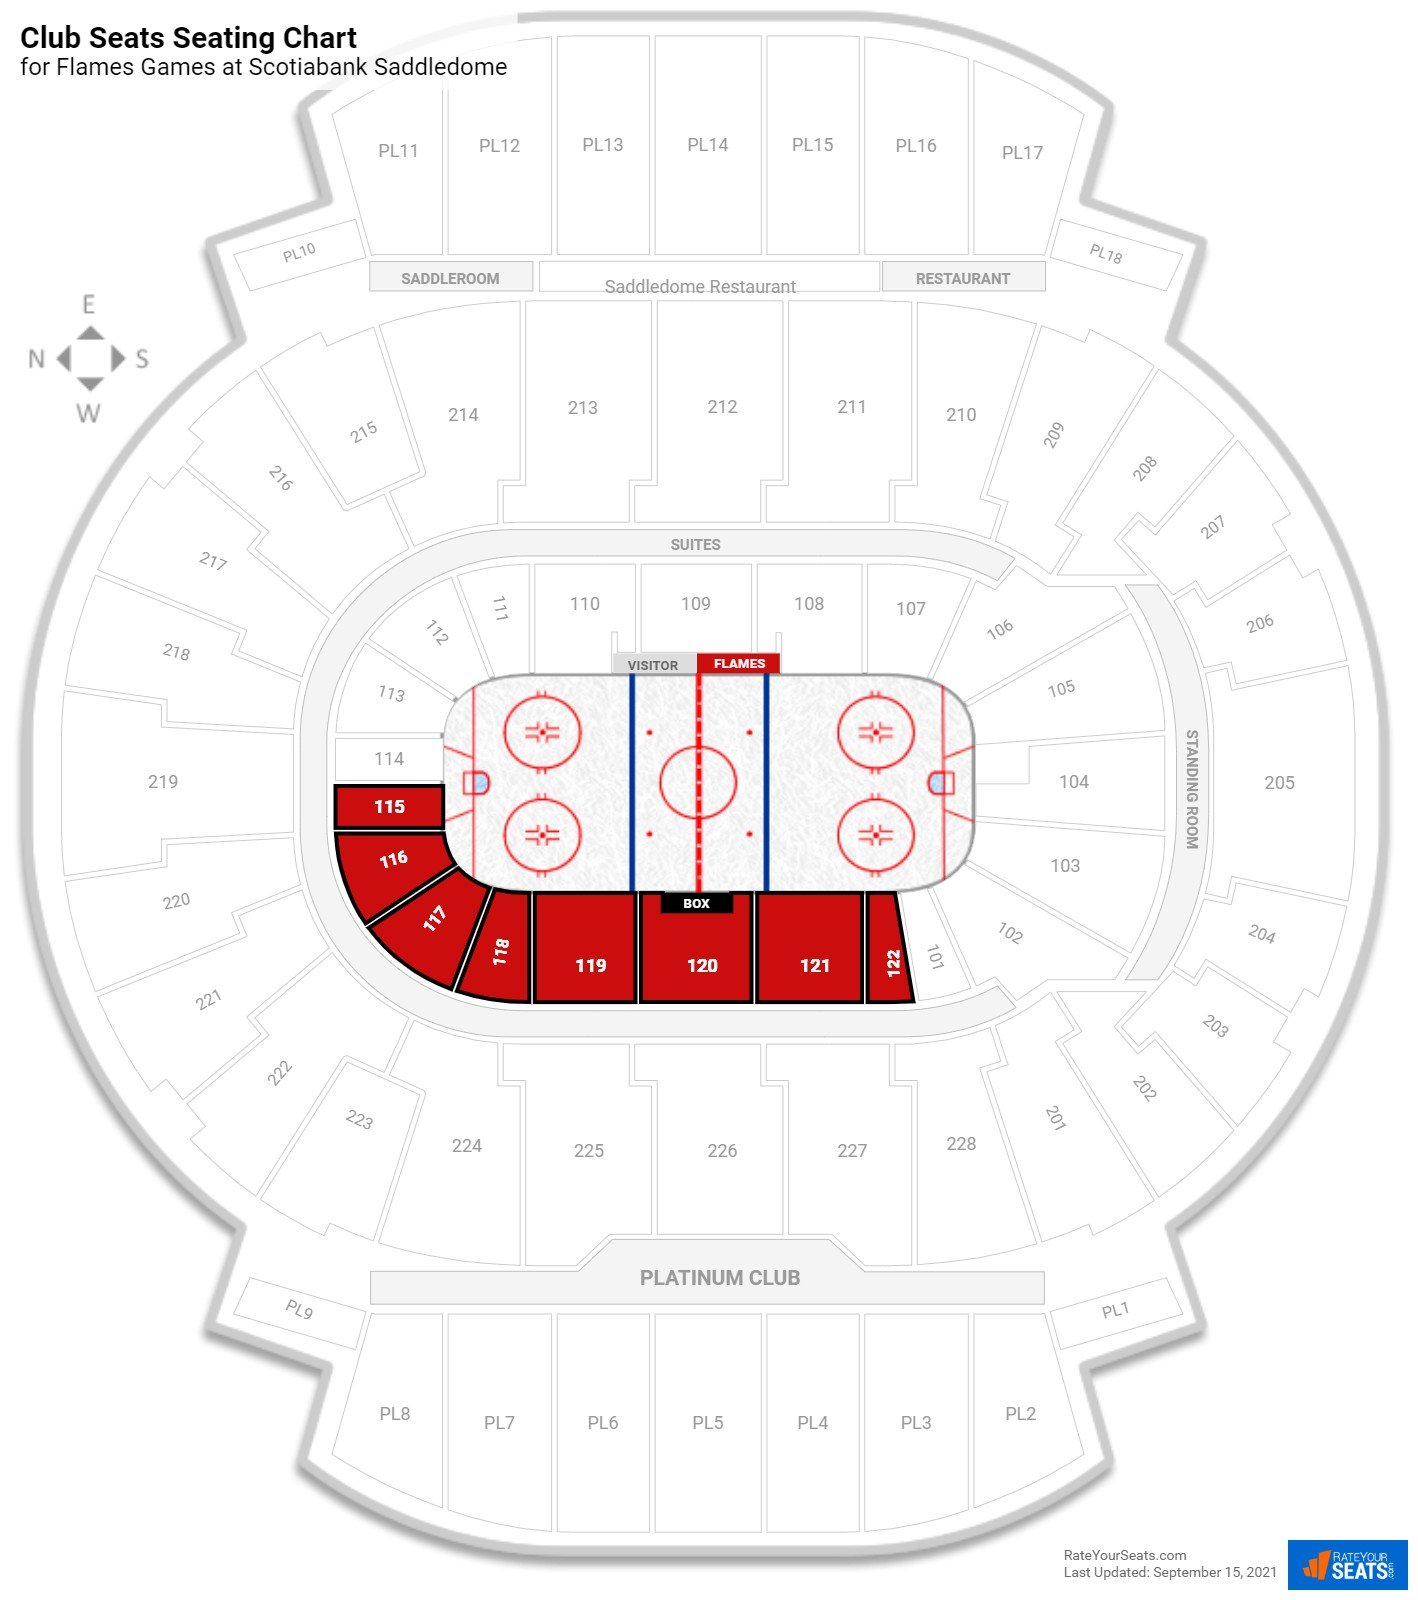 Flames Club Seats Seating Chart at Scotiabank Saddledome